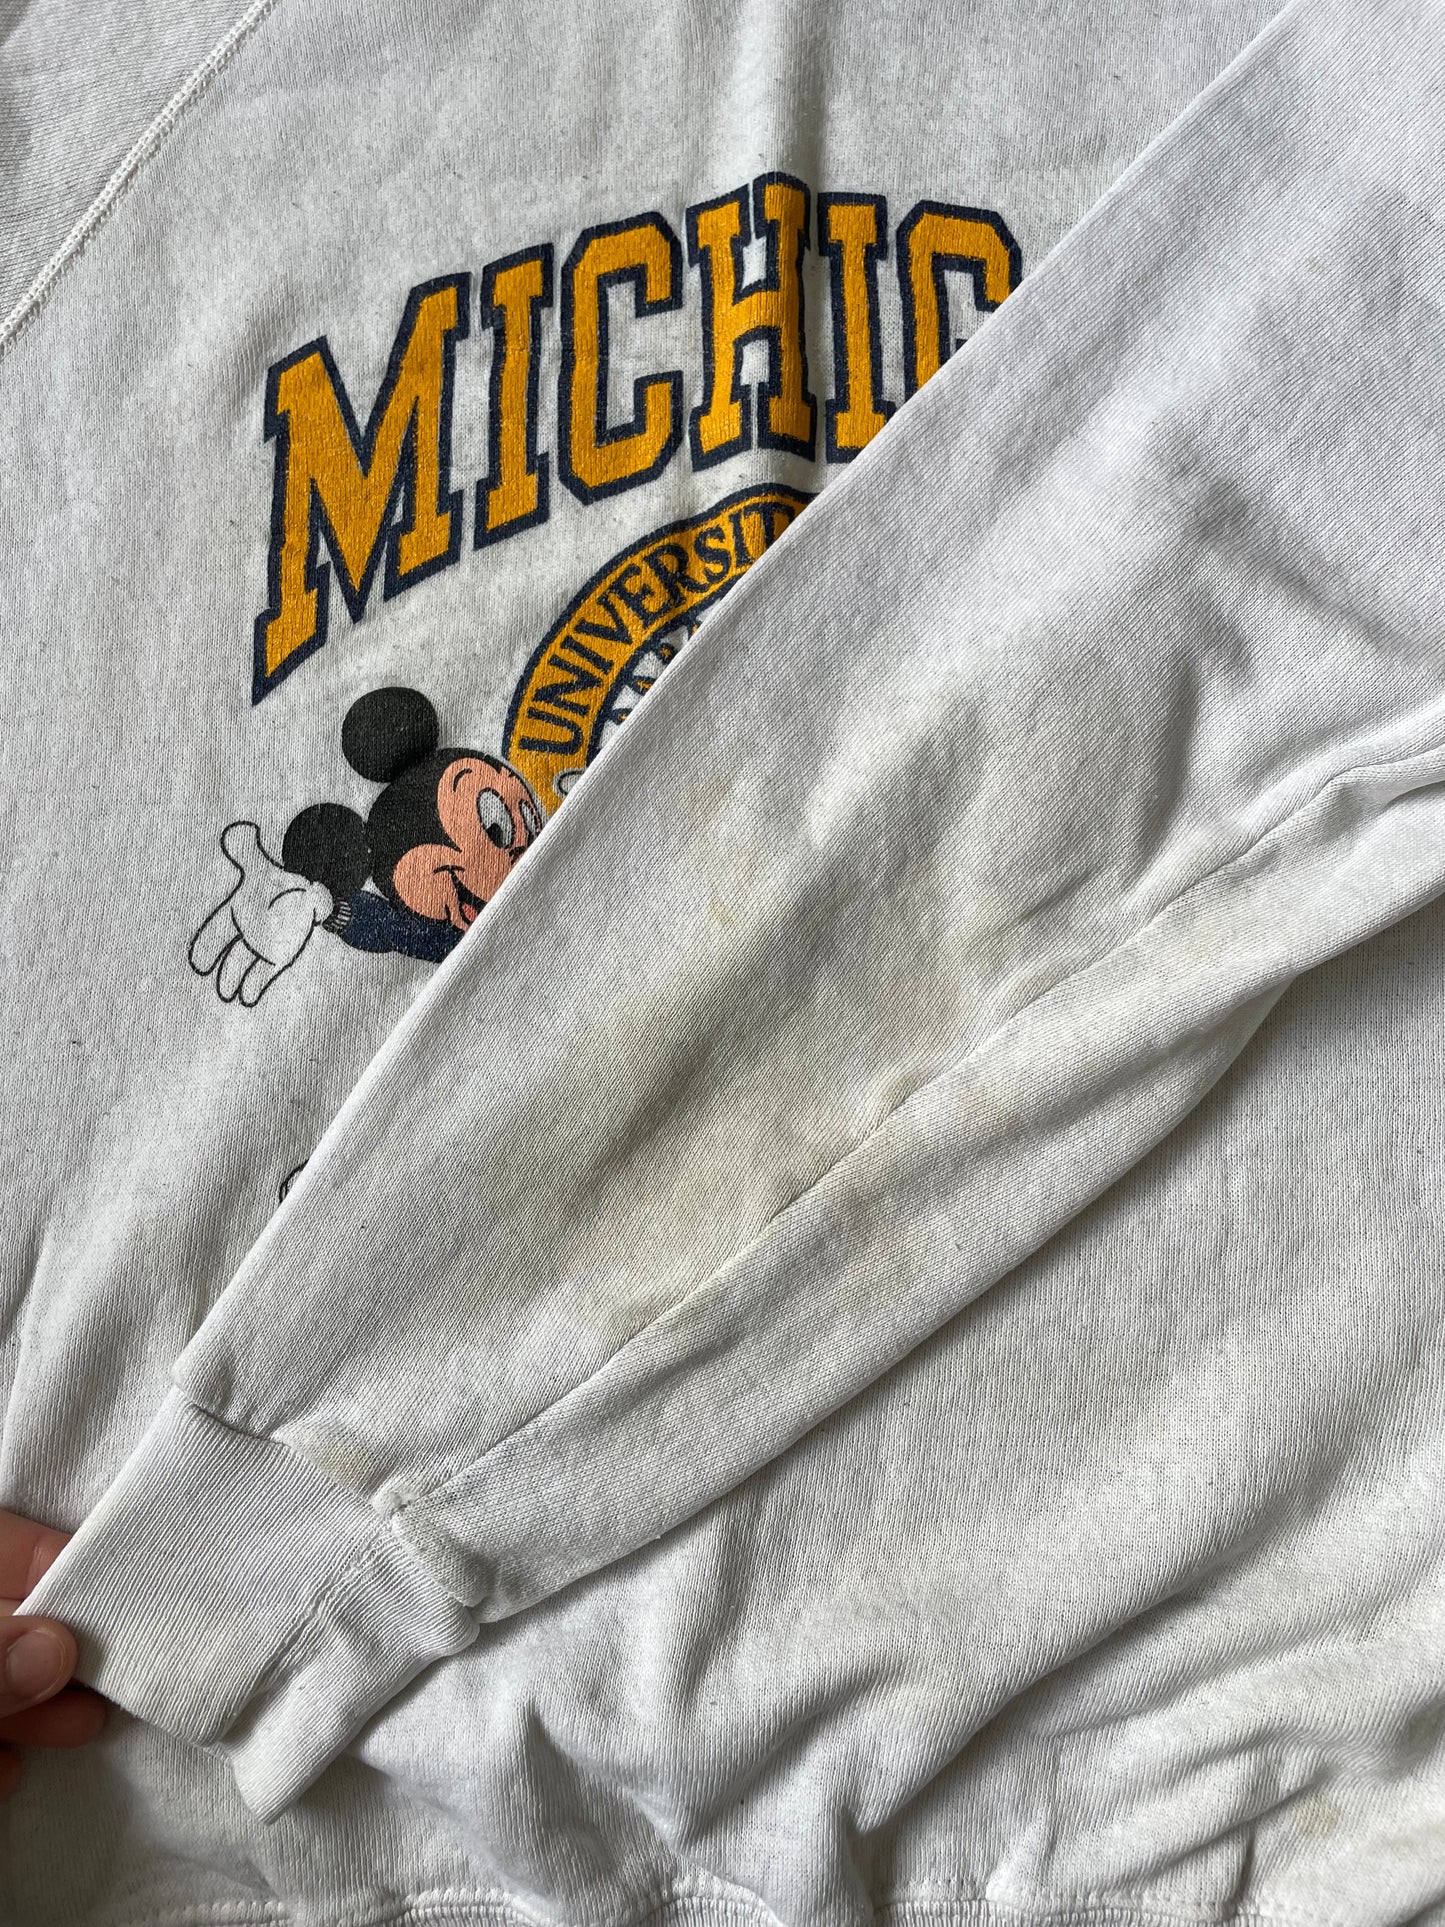 Vintage Mickey Mouse Crewneck